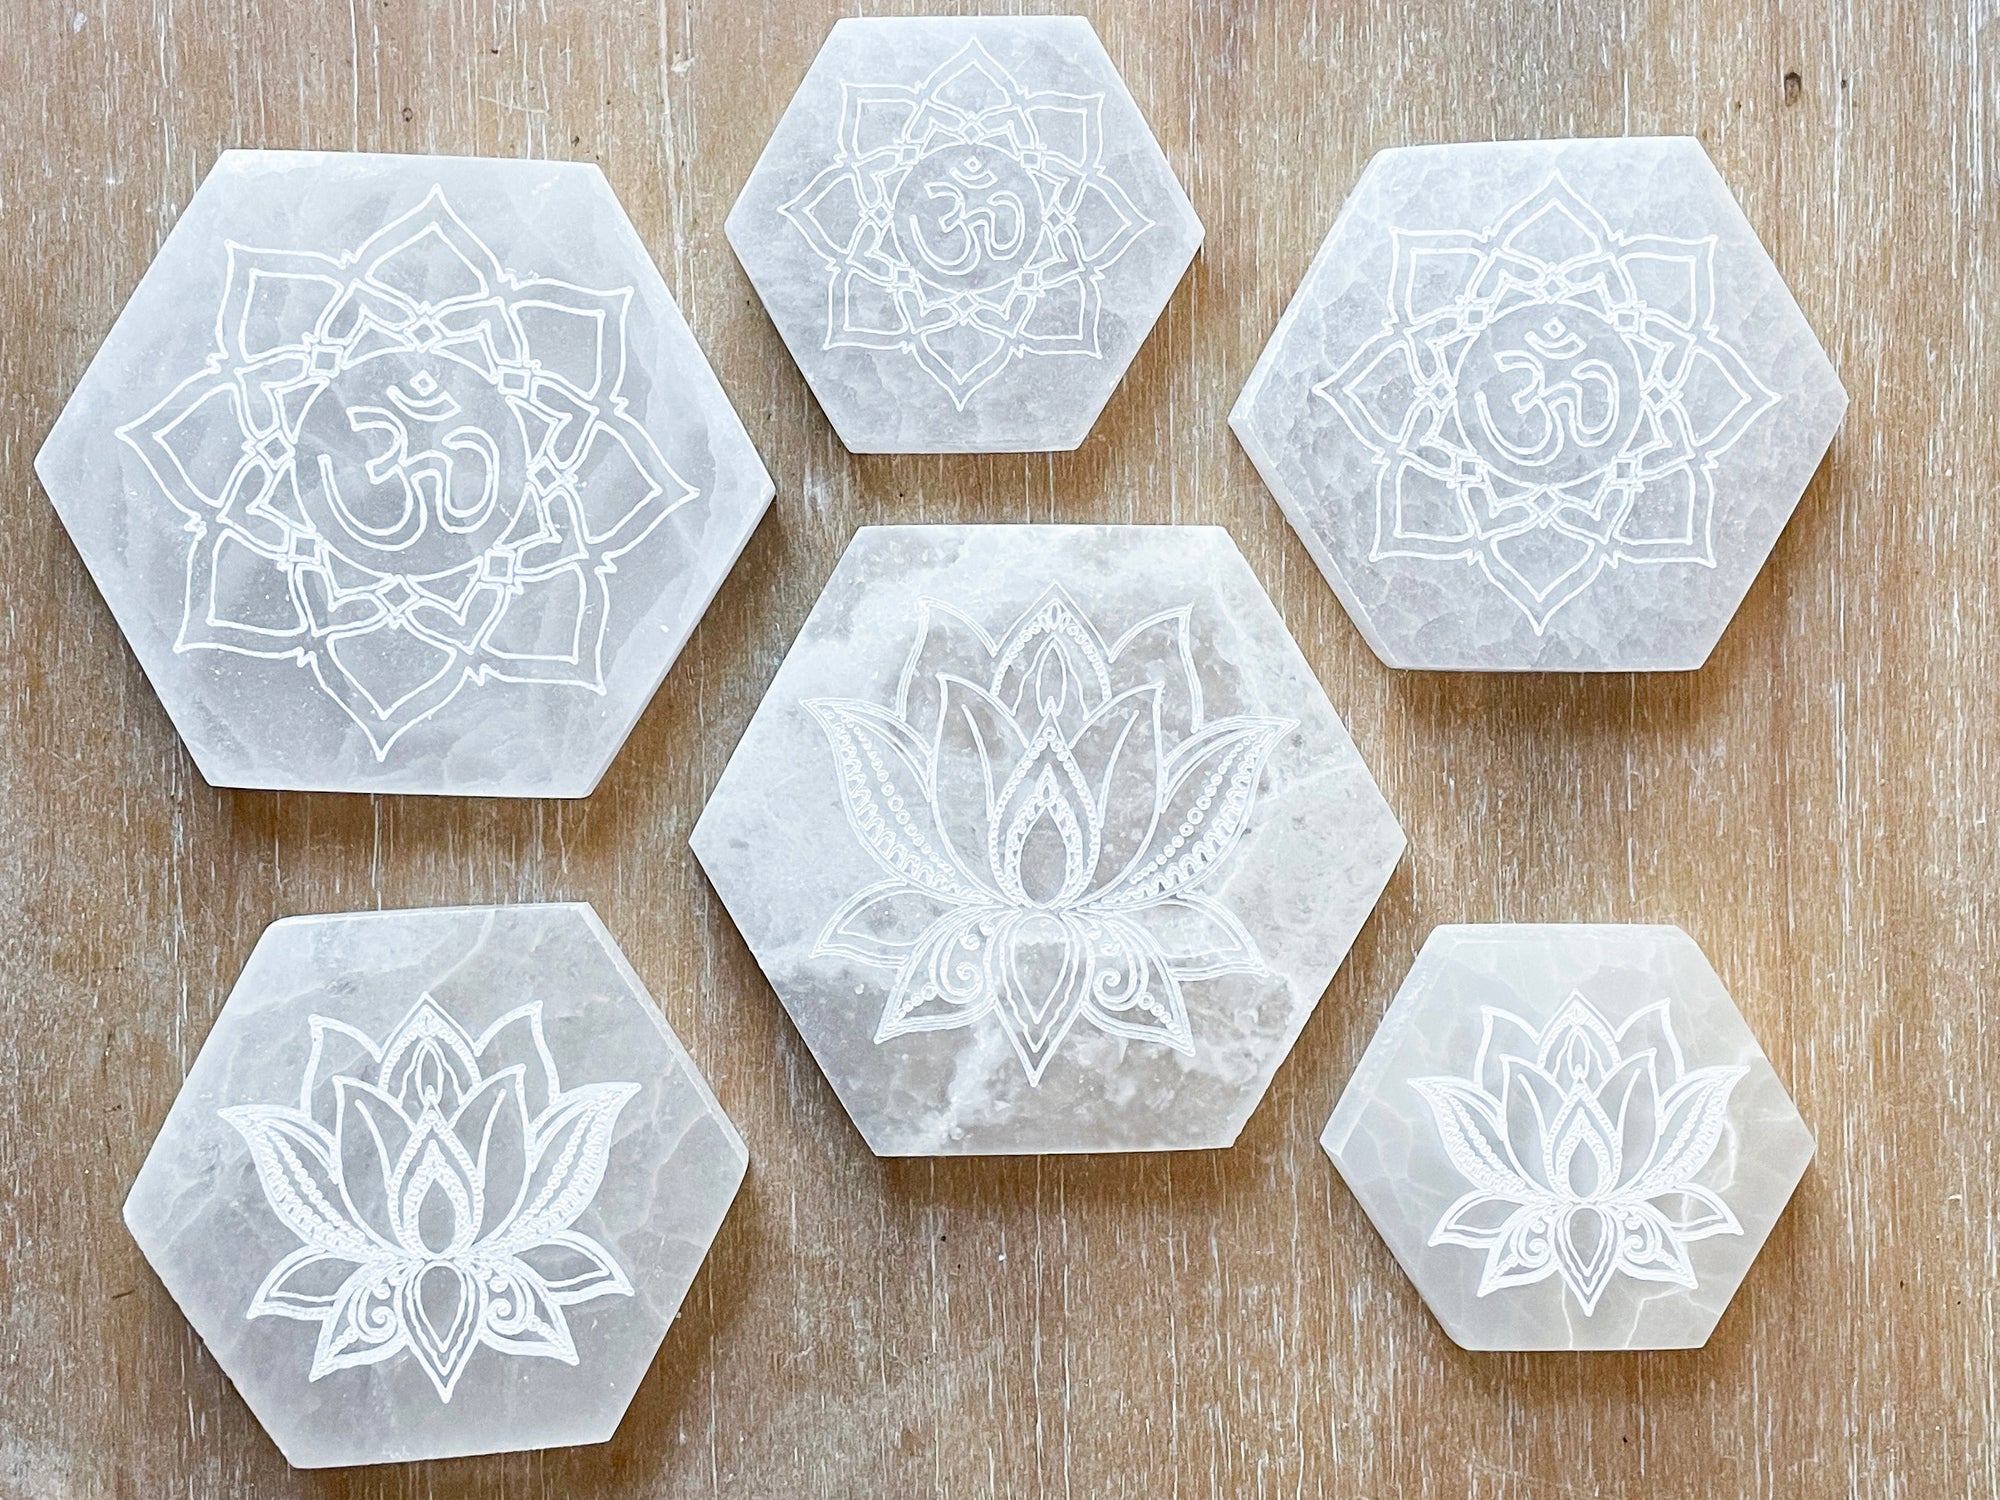 Engraved Selenite Hexagon Charging Plate - Lotus/Om